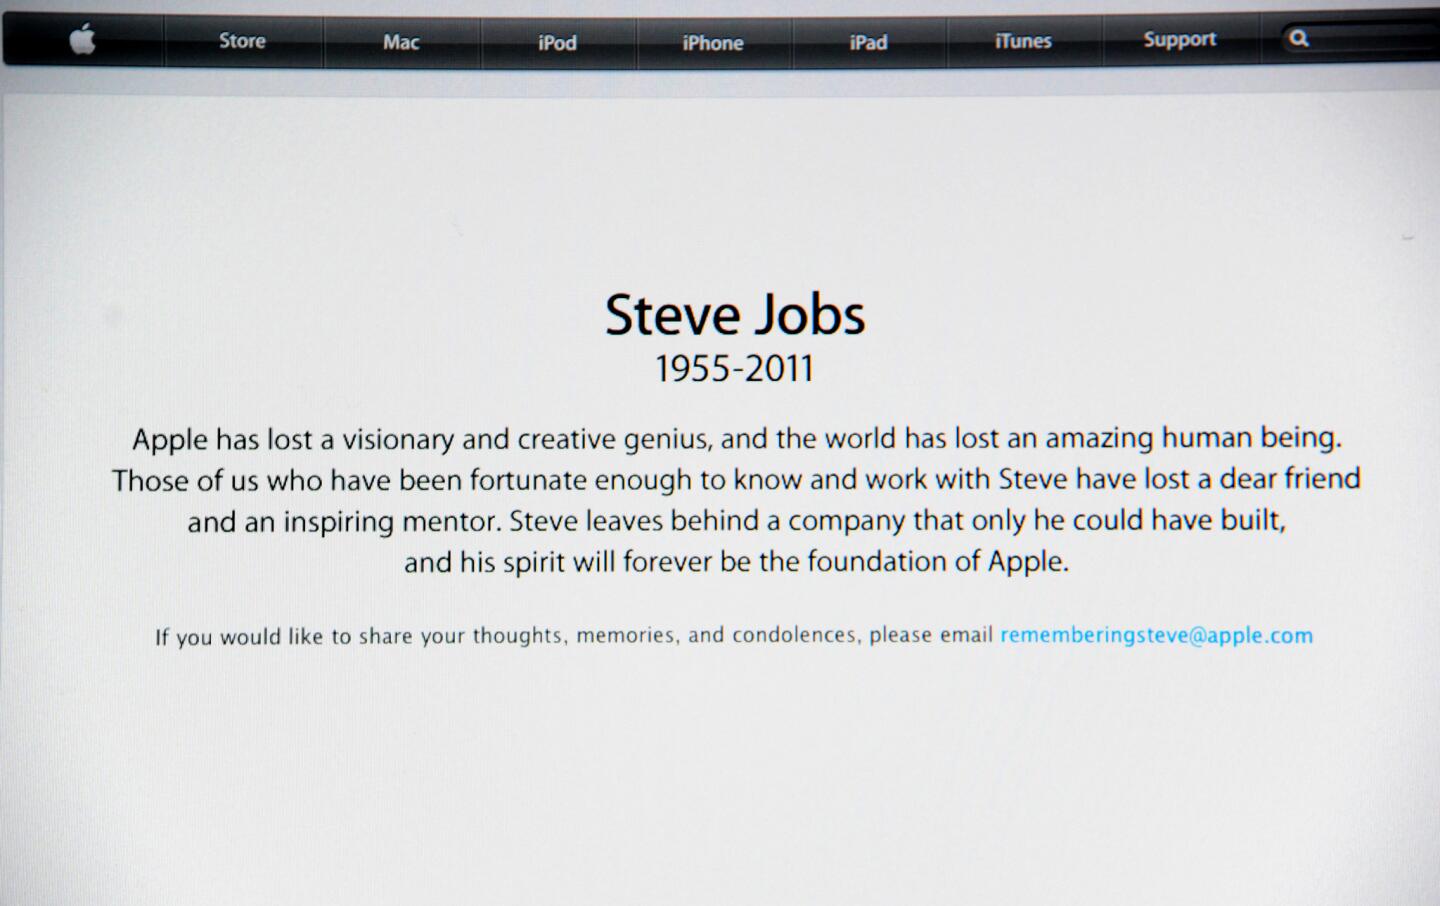 Statement on Apple.com